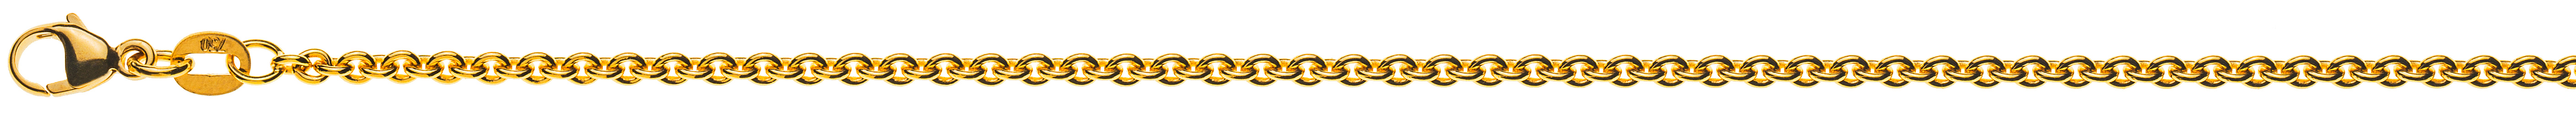 AURONOS Prestige Necklace Yellow Gold 18K Round Anchor 60cm 2.3mm